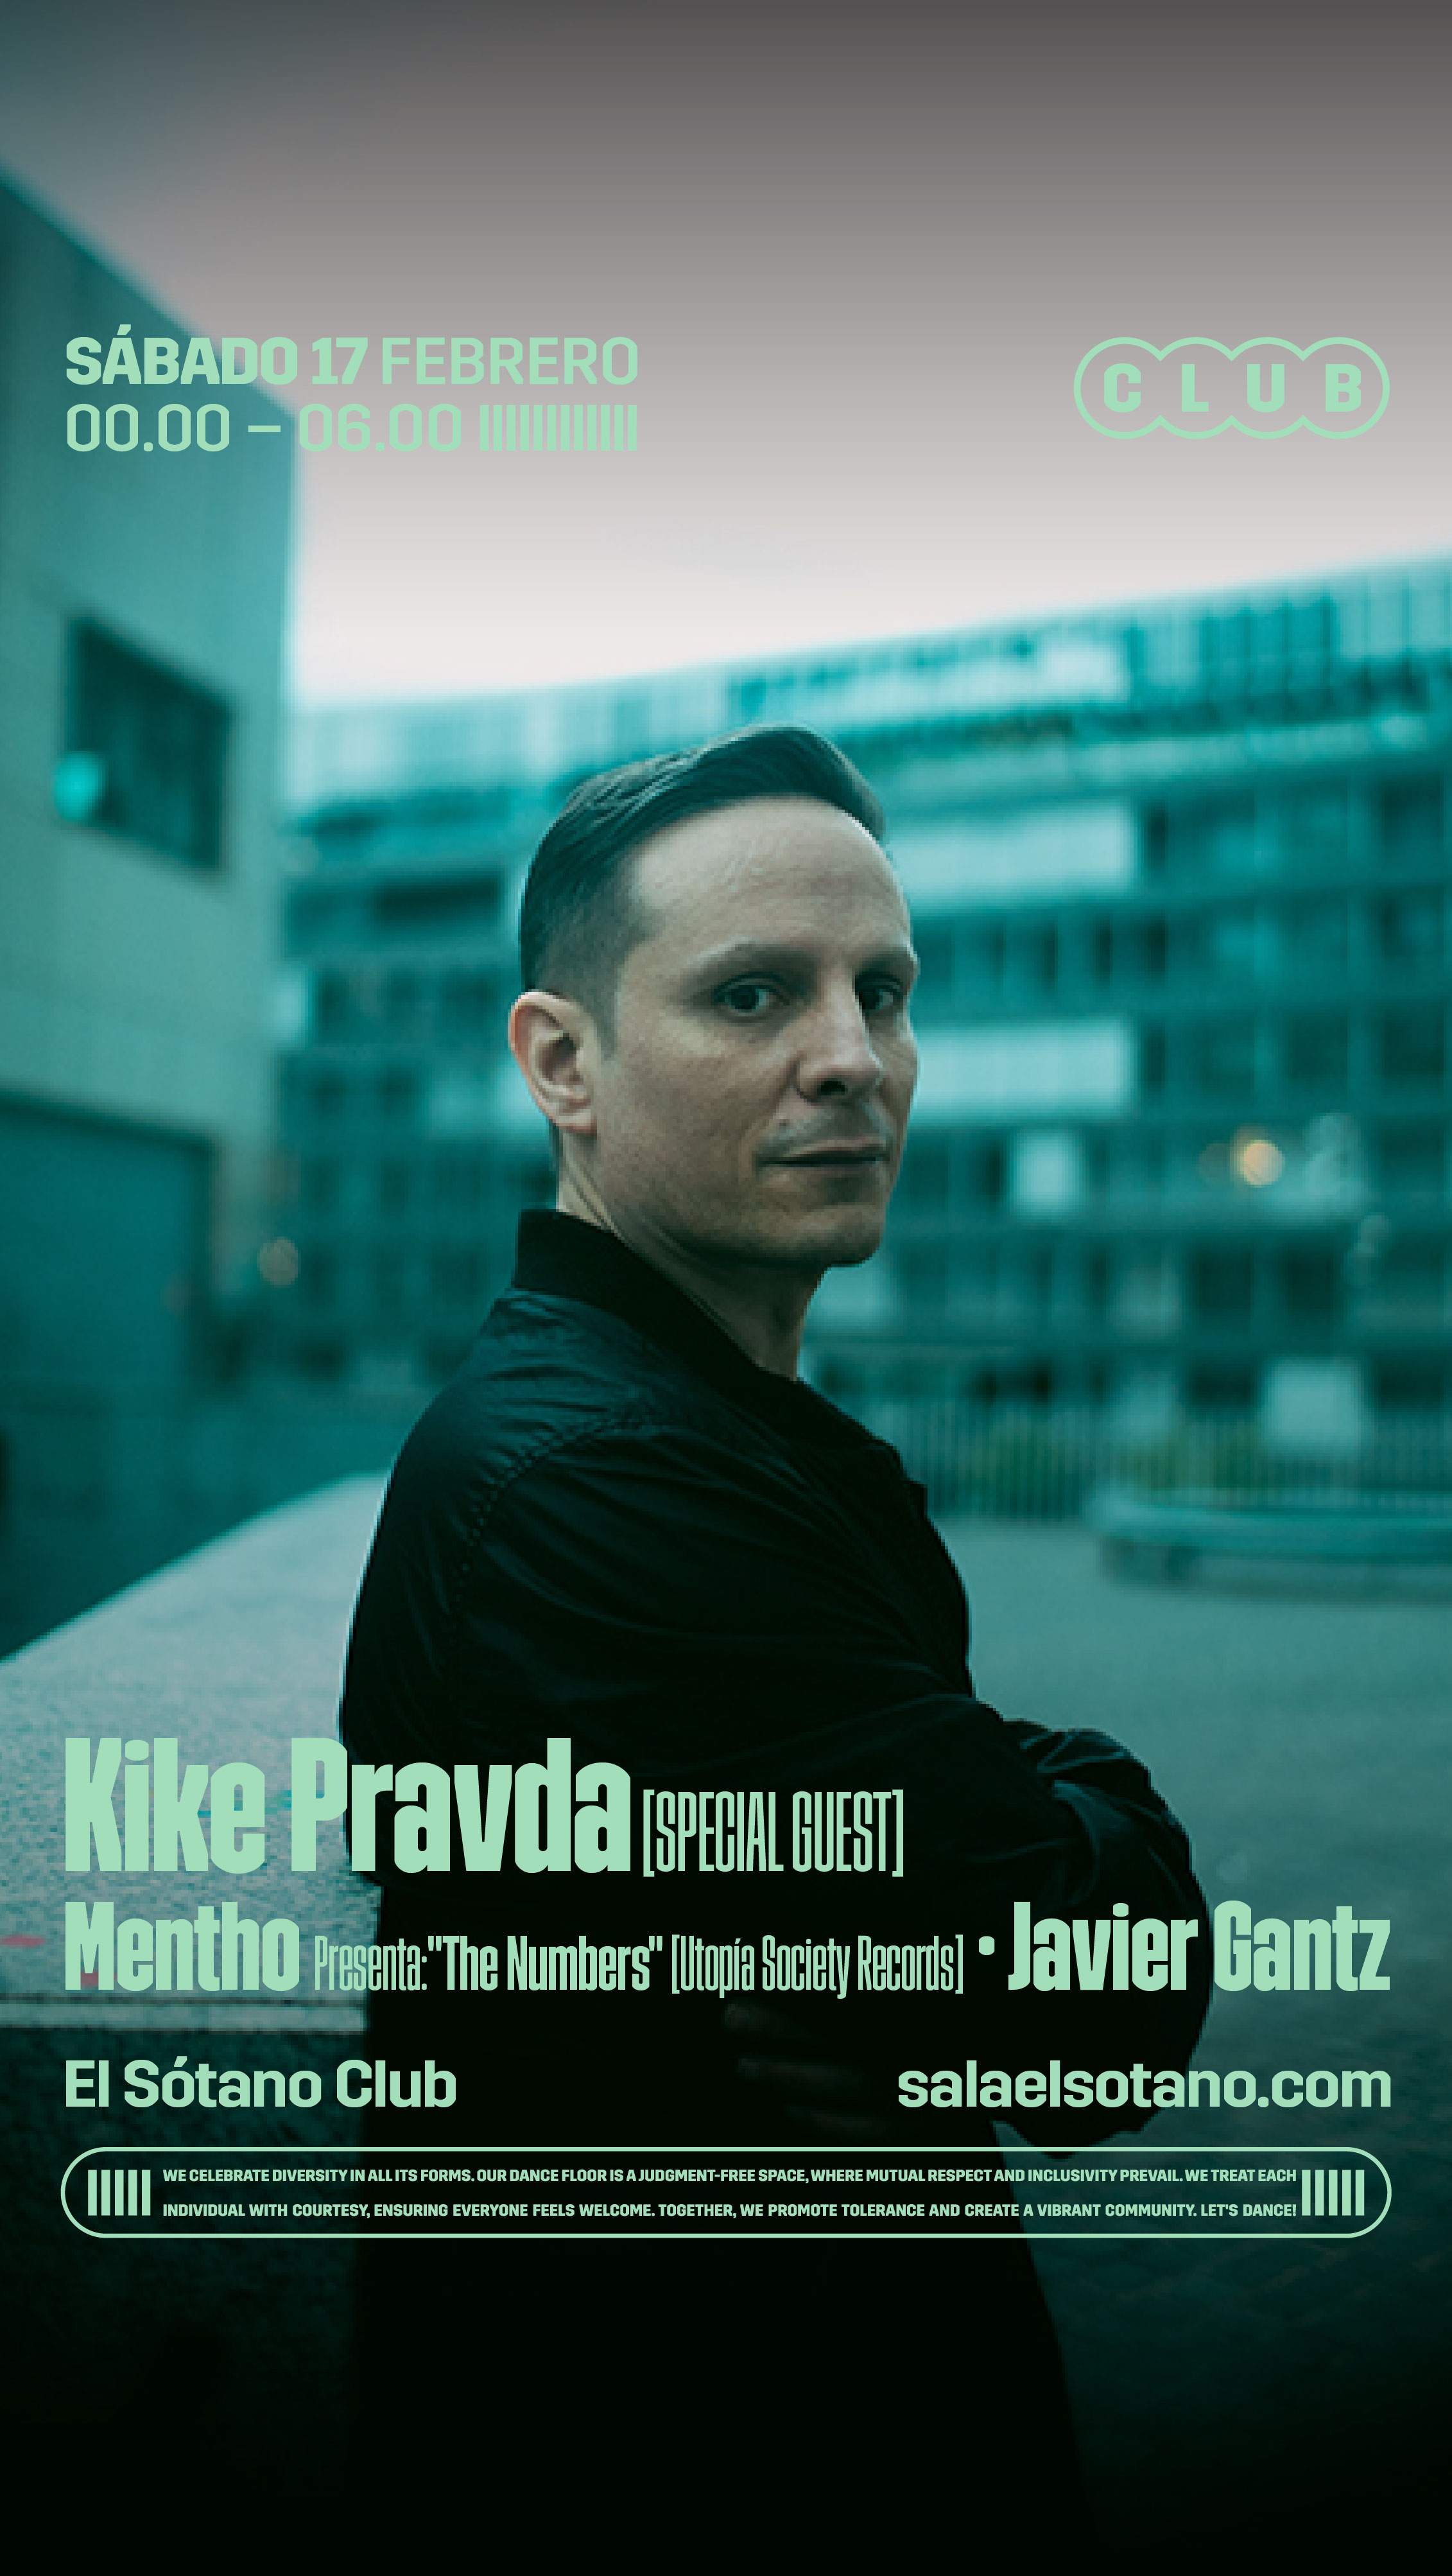 EL SÓTANO Club: Kike Pravda, Mentho presenta: The Numbers (Utopia society records) Javier Gantz - フライヤー表